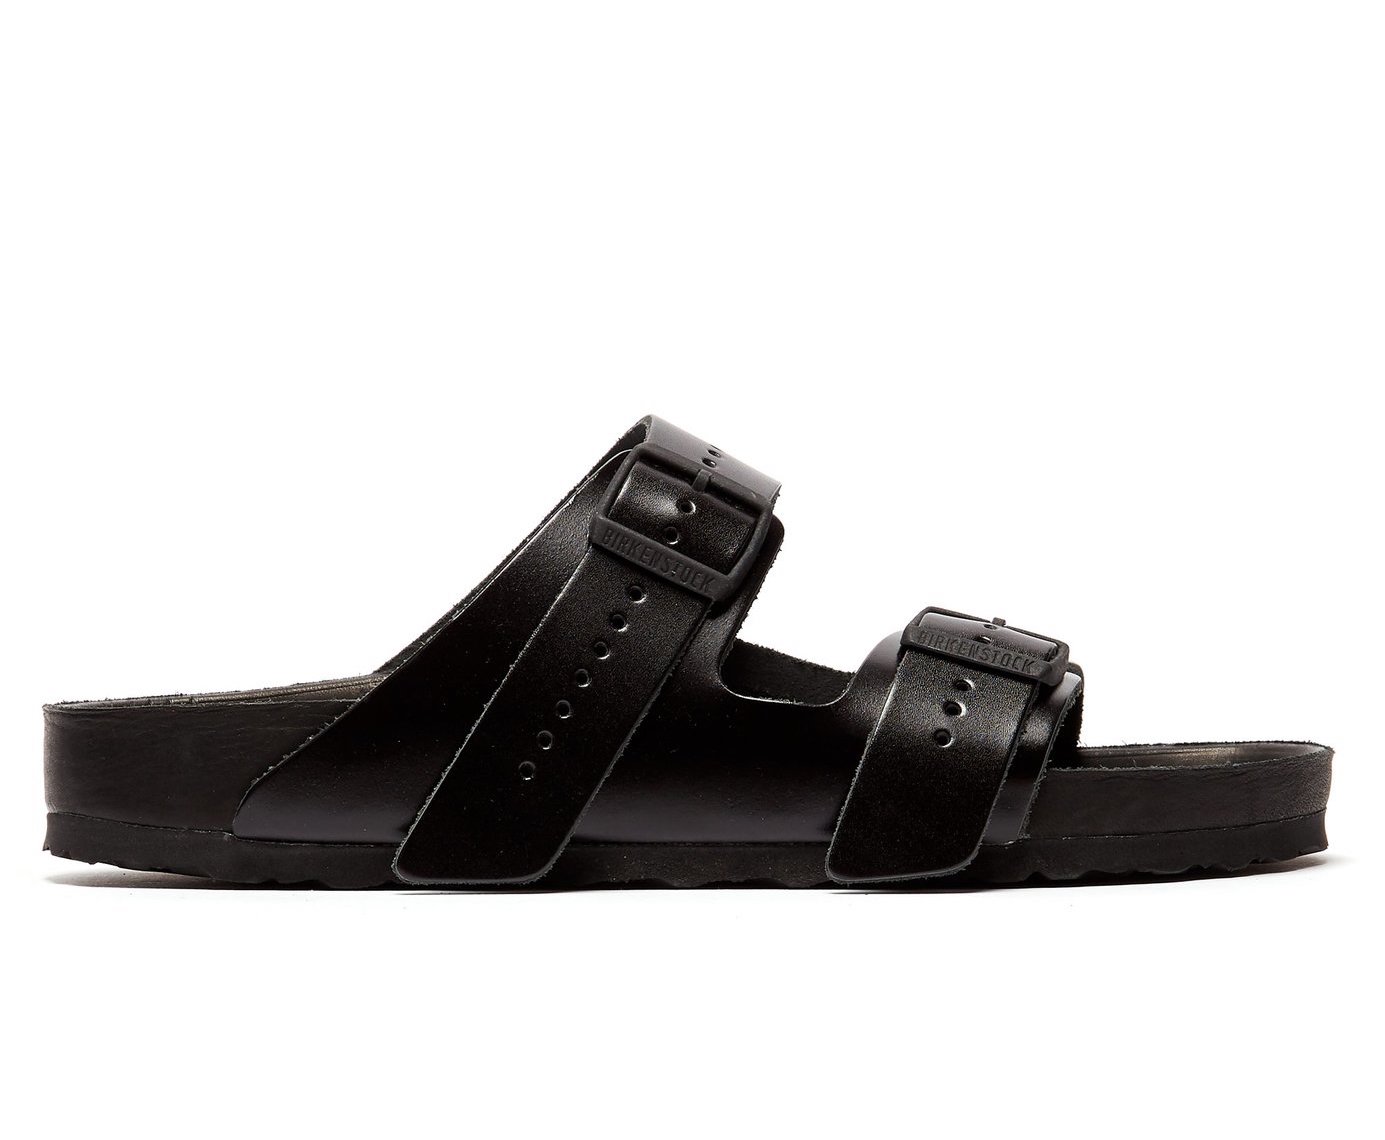 RICK OWENS X Birkenstock Arizona leather sandals